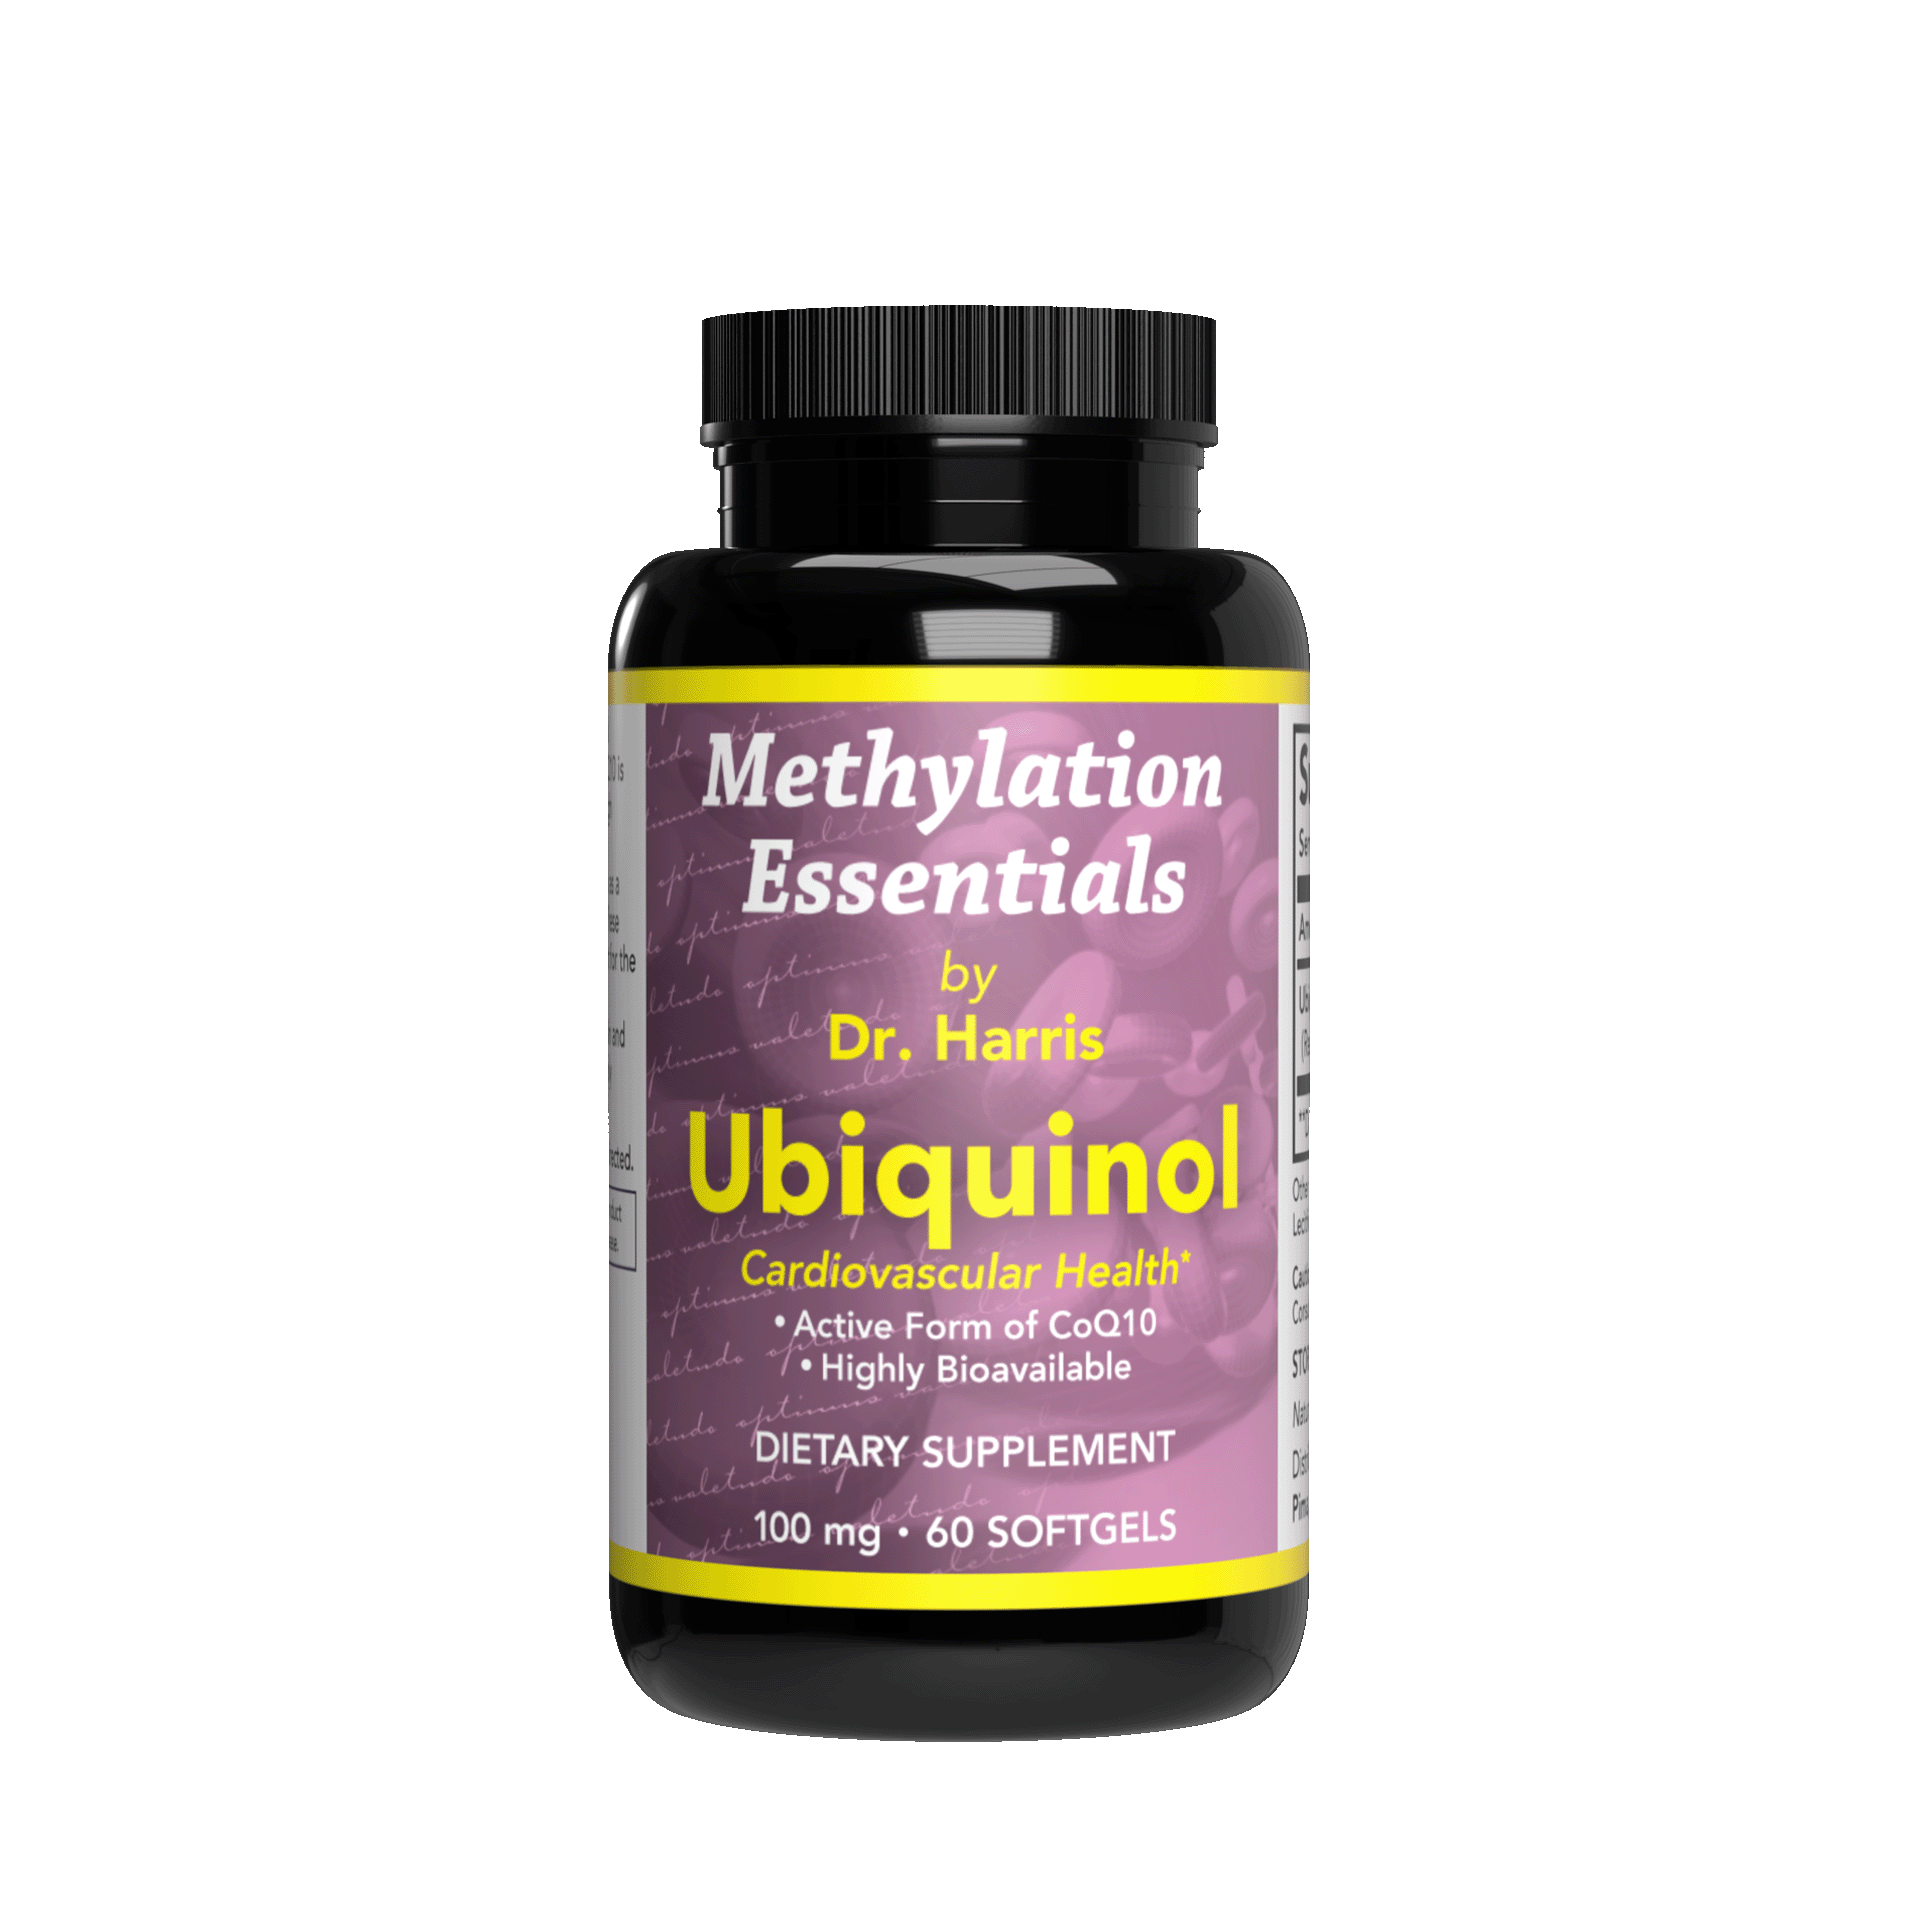 Image of a bottle of Essentials Ubiquinol.